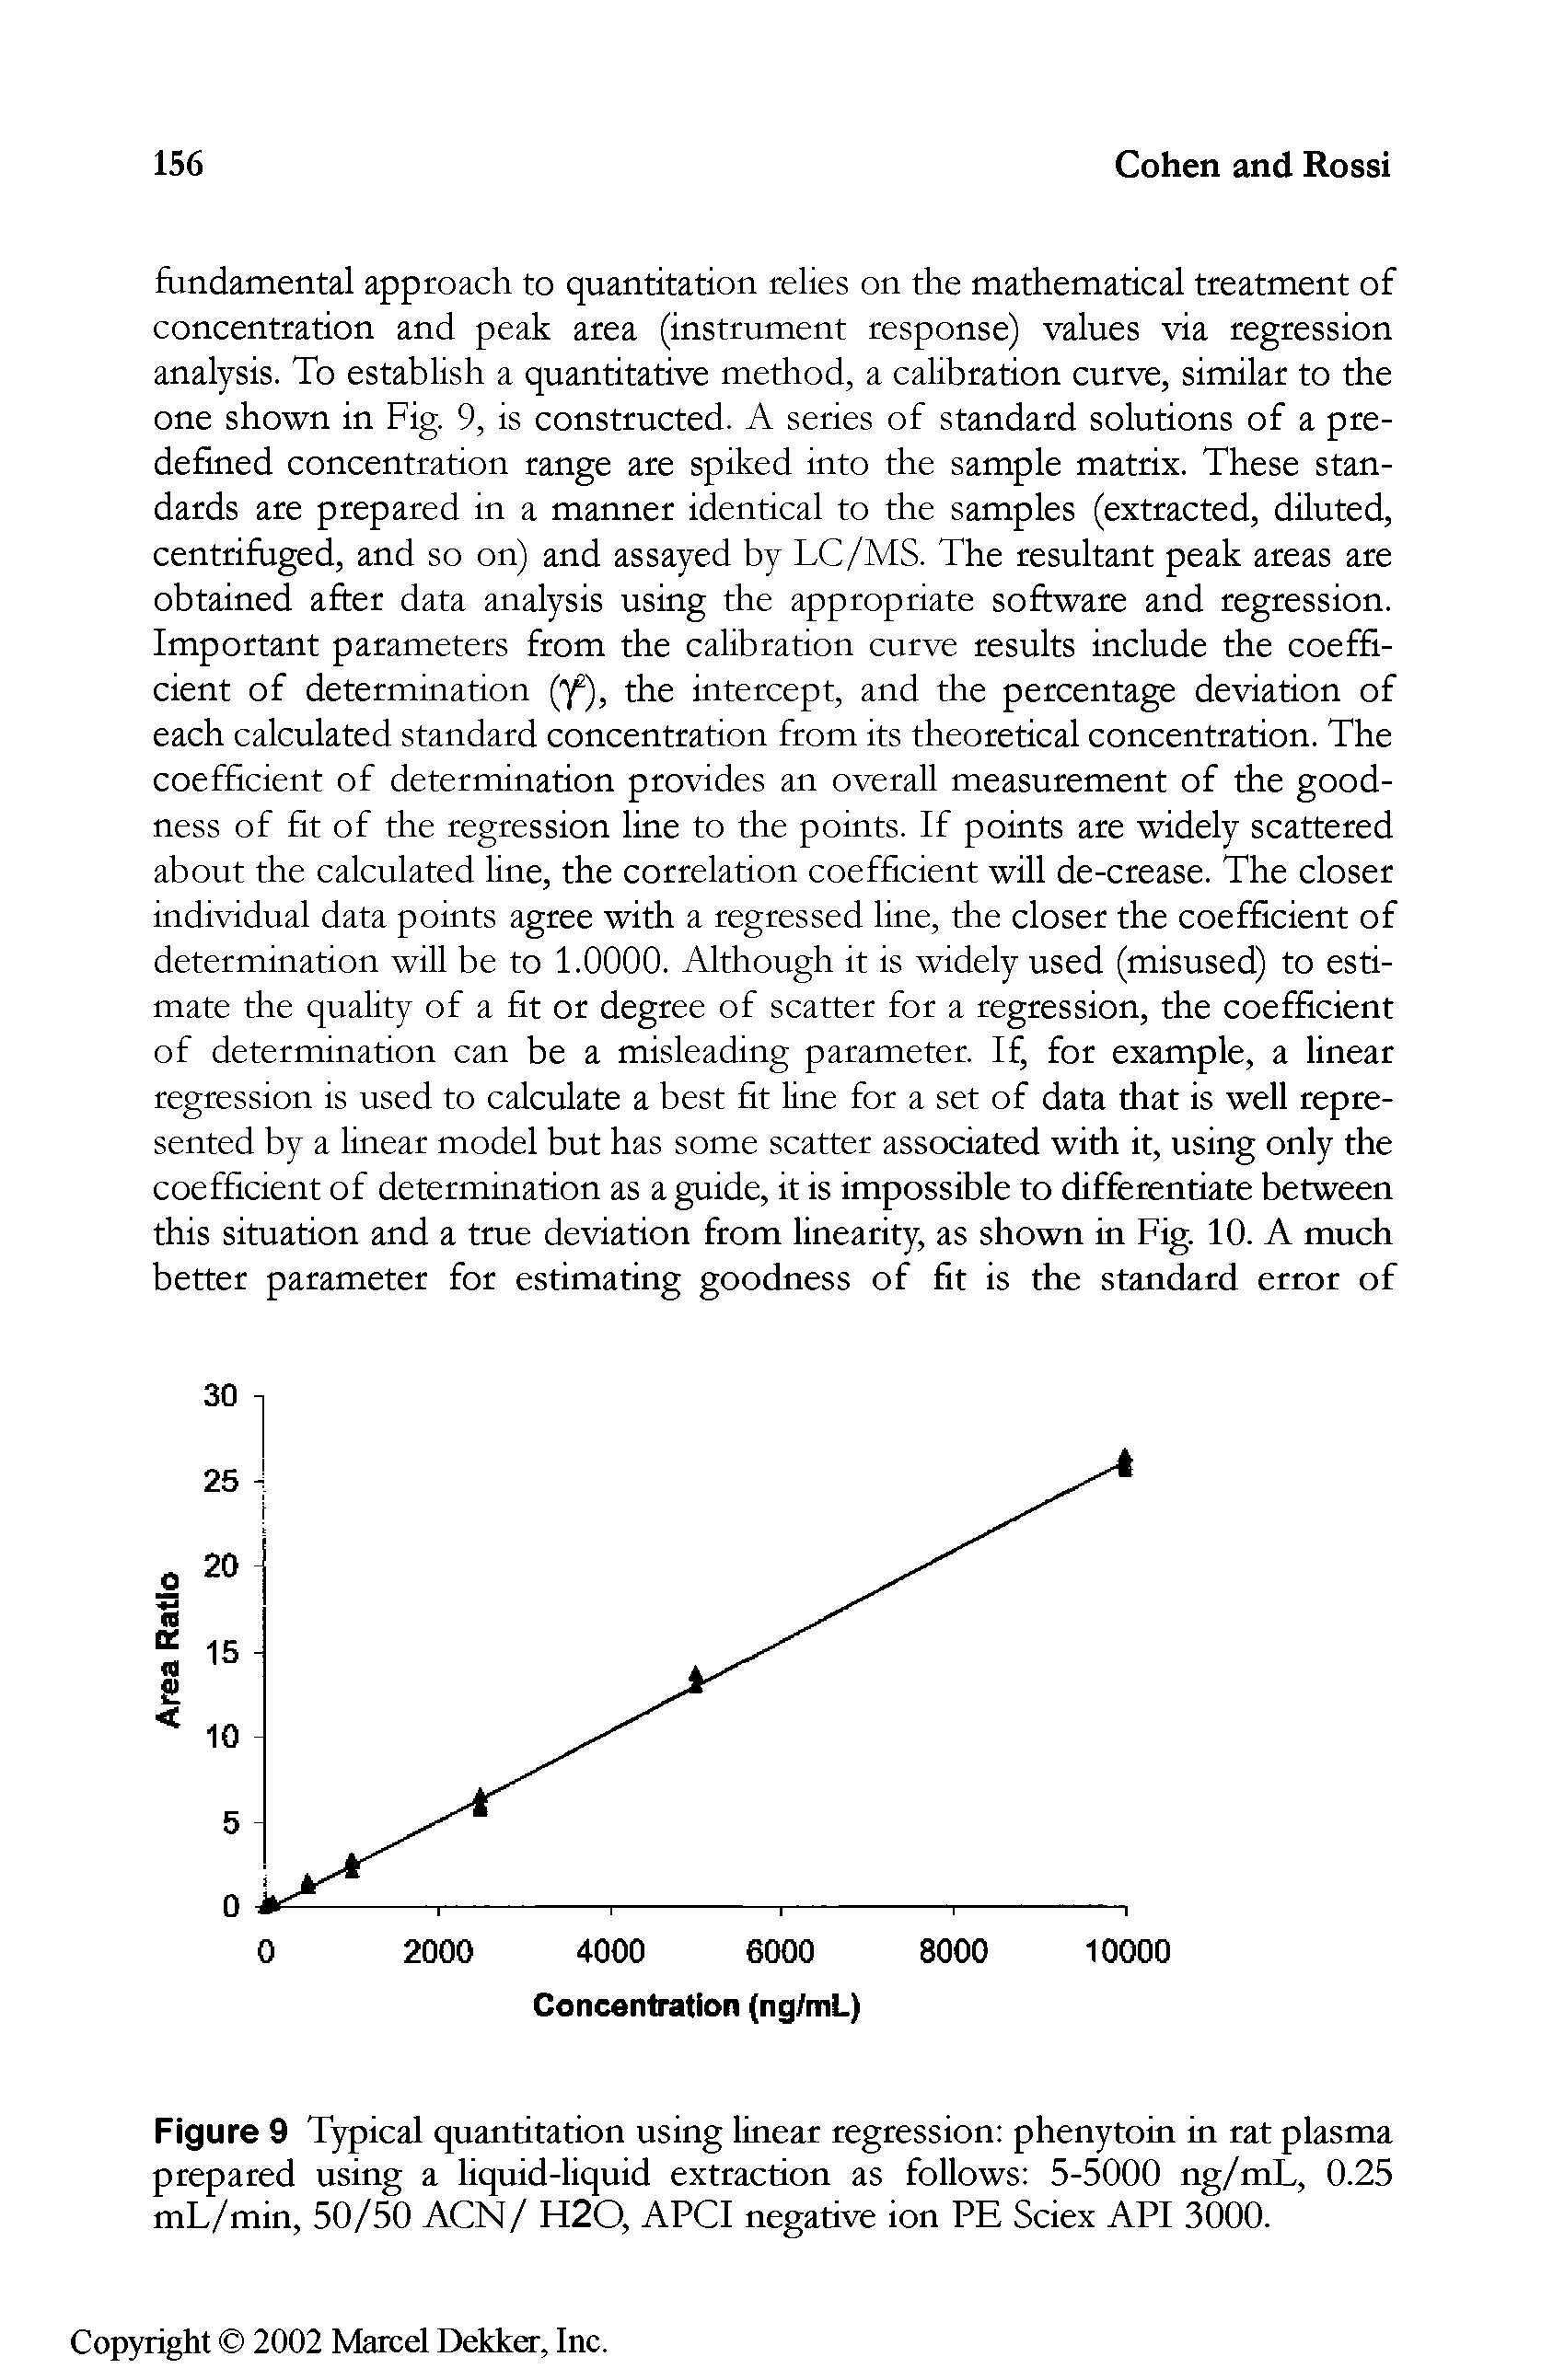 Figure 9 Typical quantitation using linear regression phenytoin in rat plasma prepared using a liquid-liquid extraction as follows 5-5000 ng/mL, 0.25 mL/min, 50/50 ACN/ H20, APCI negative ion PE Sciex API 3000.